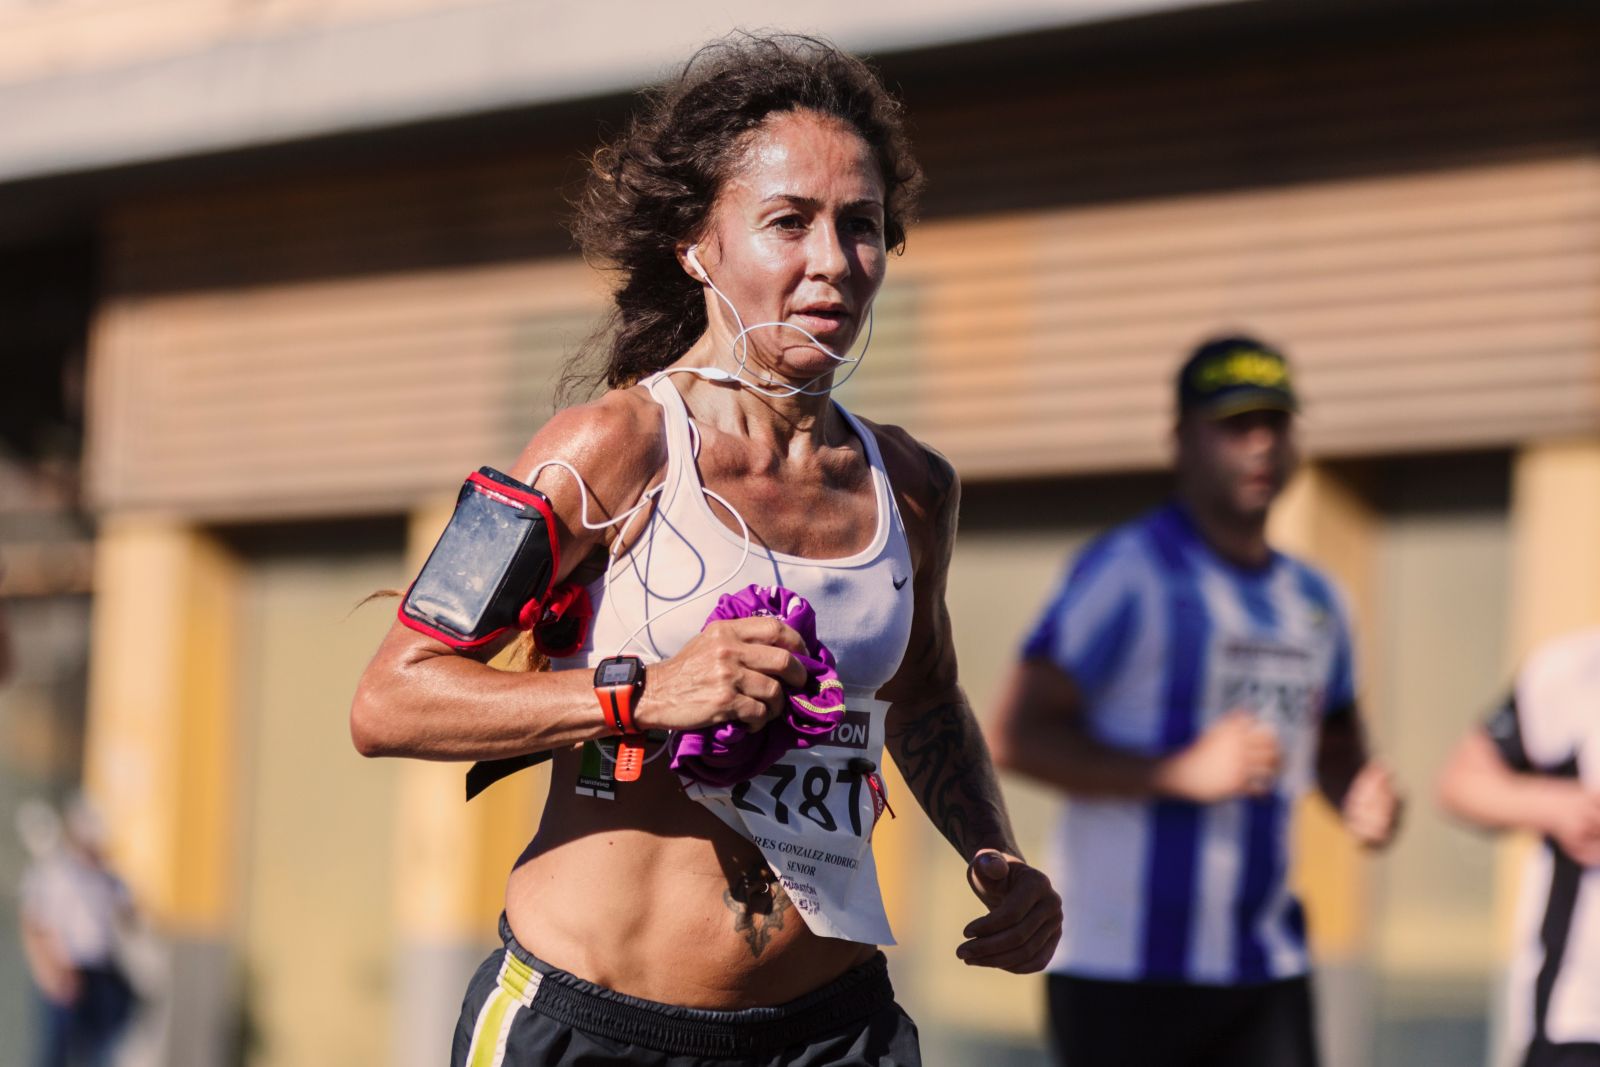 a-woman-running-in-a-marathon